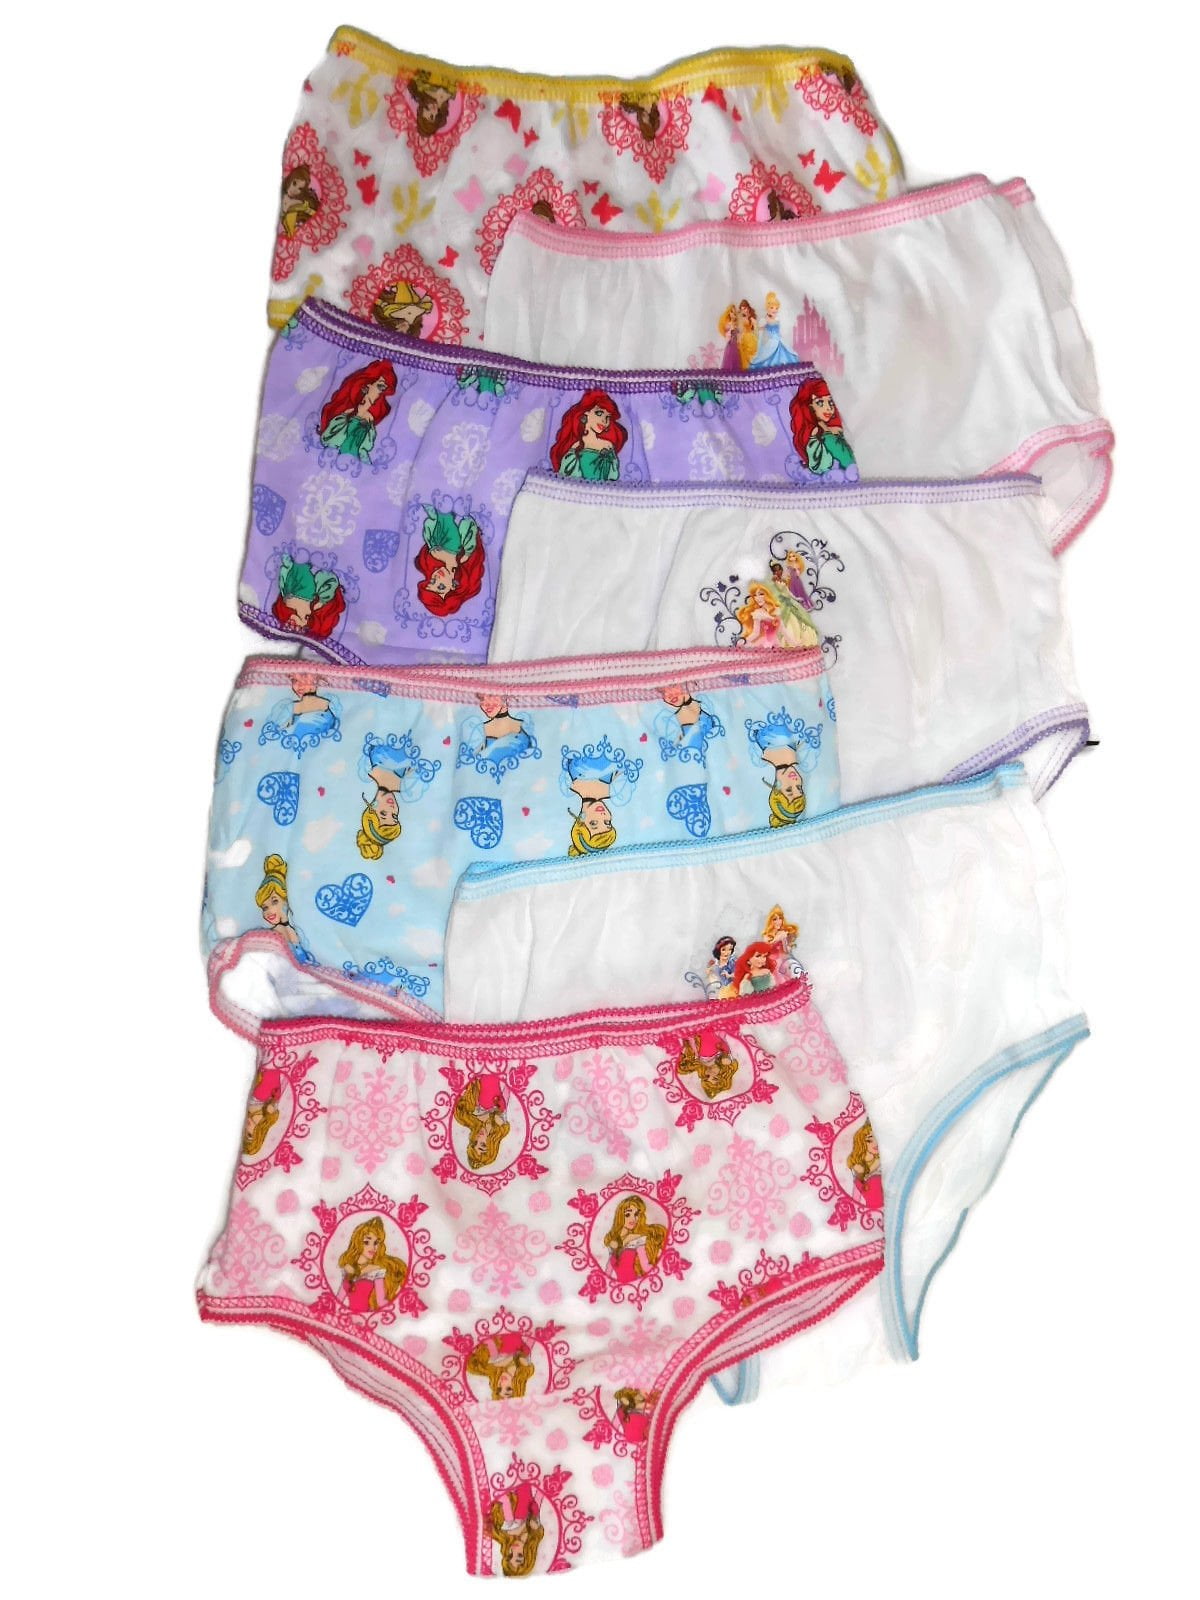 PRINCESS Panties Toddler Girls' 7-pack 2T/3T, 4T NEW Handcraft DISNEY